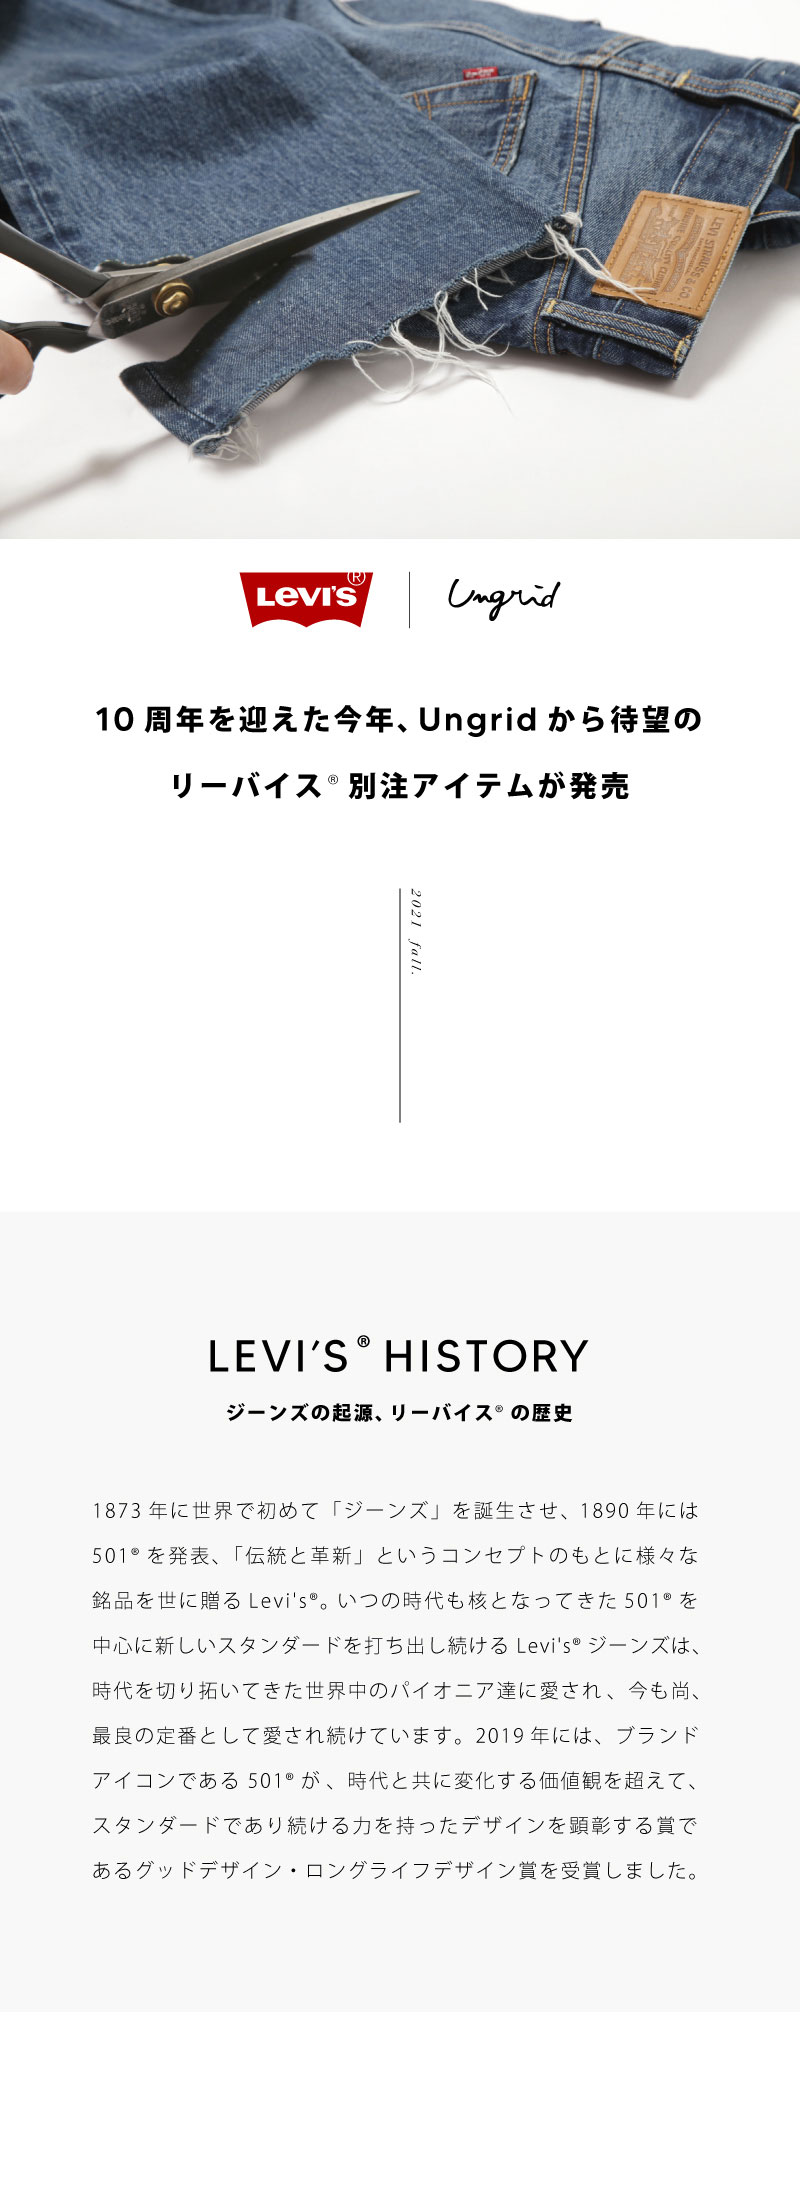 Ungrid】【10周年限定】Levi's別注デニム -10th anniversary